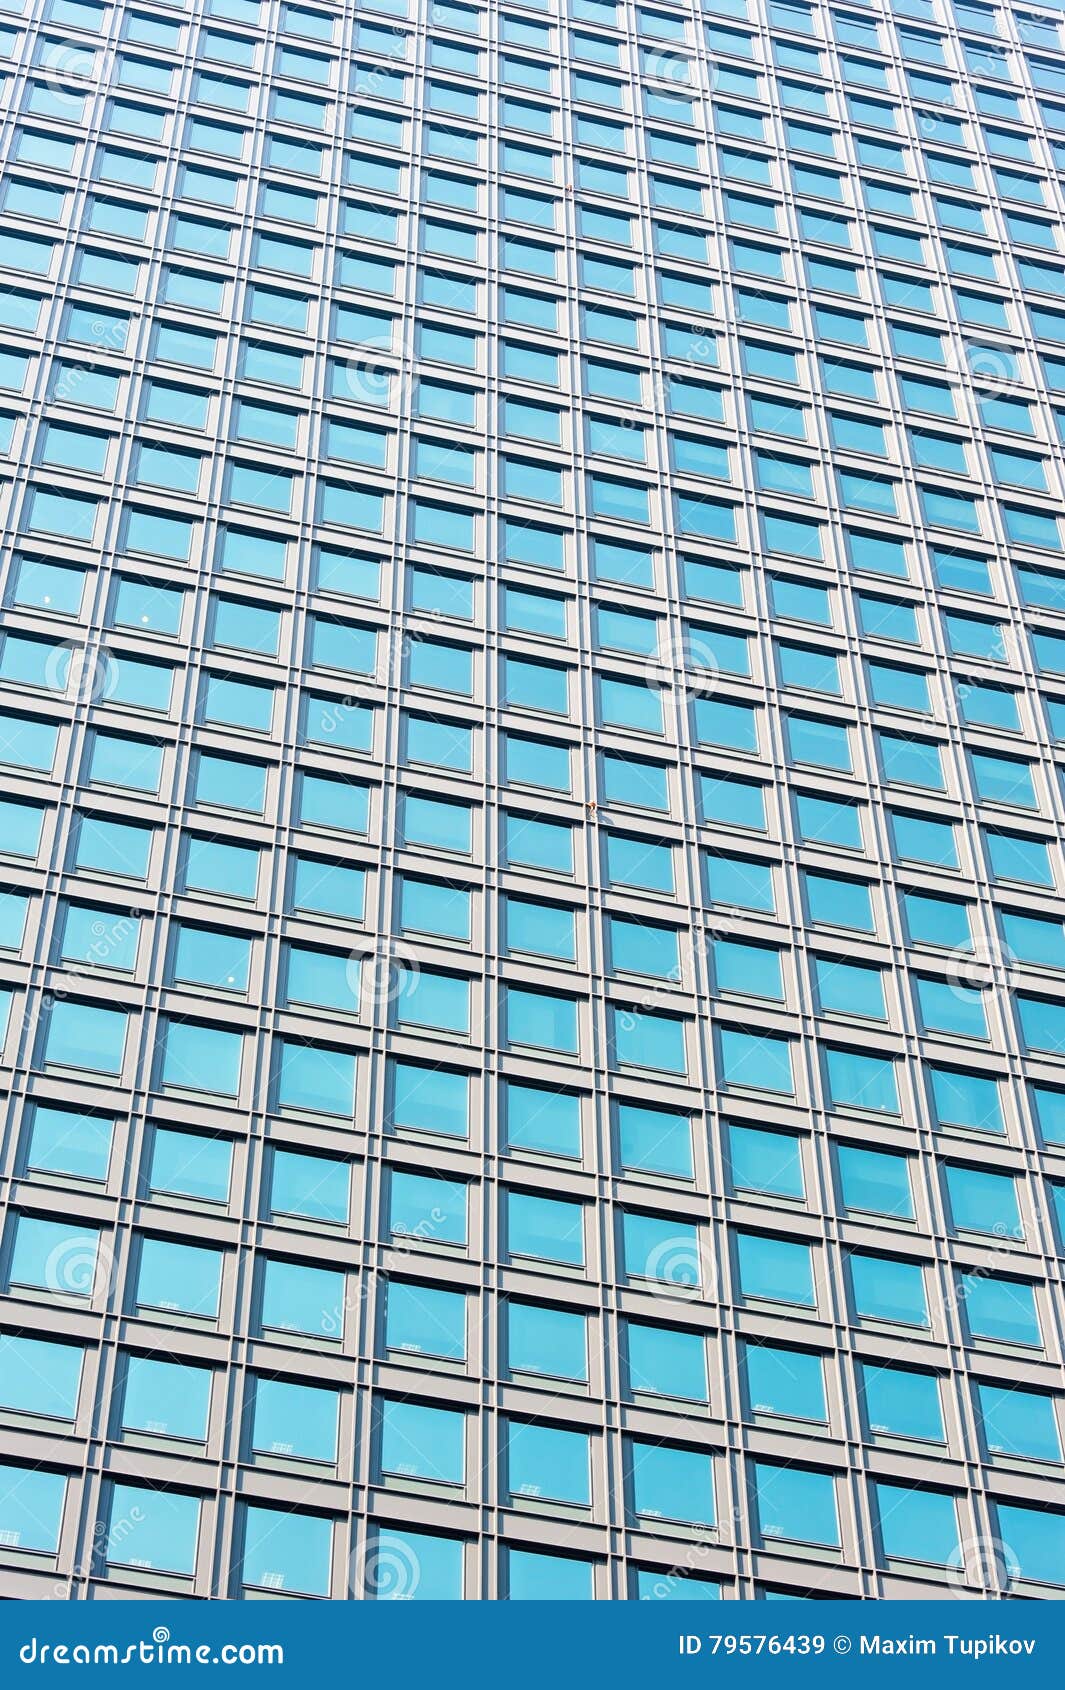 modern glass skycraper wall background